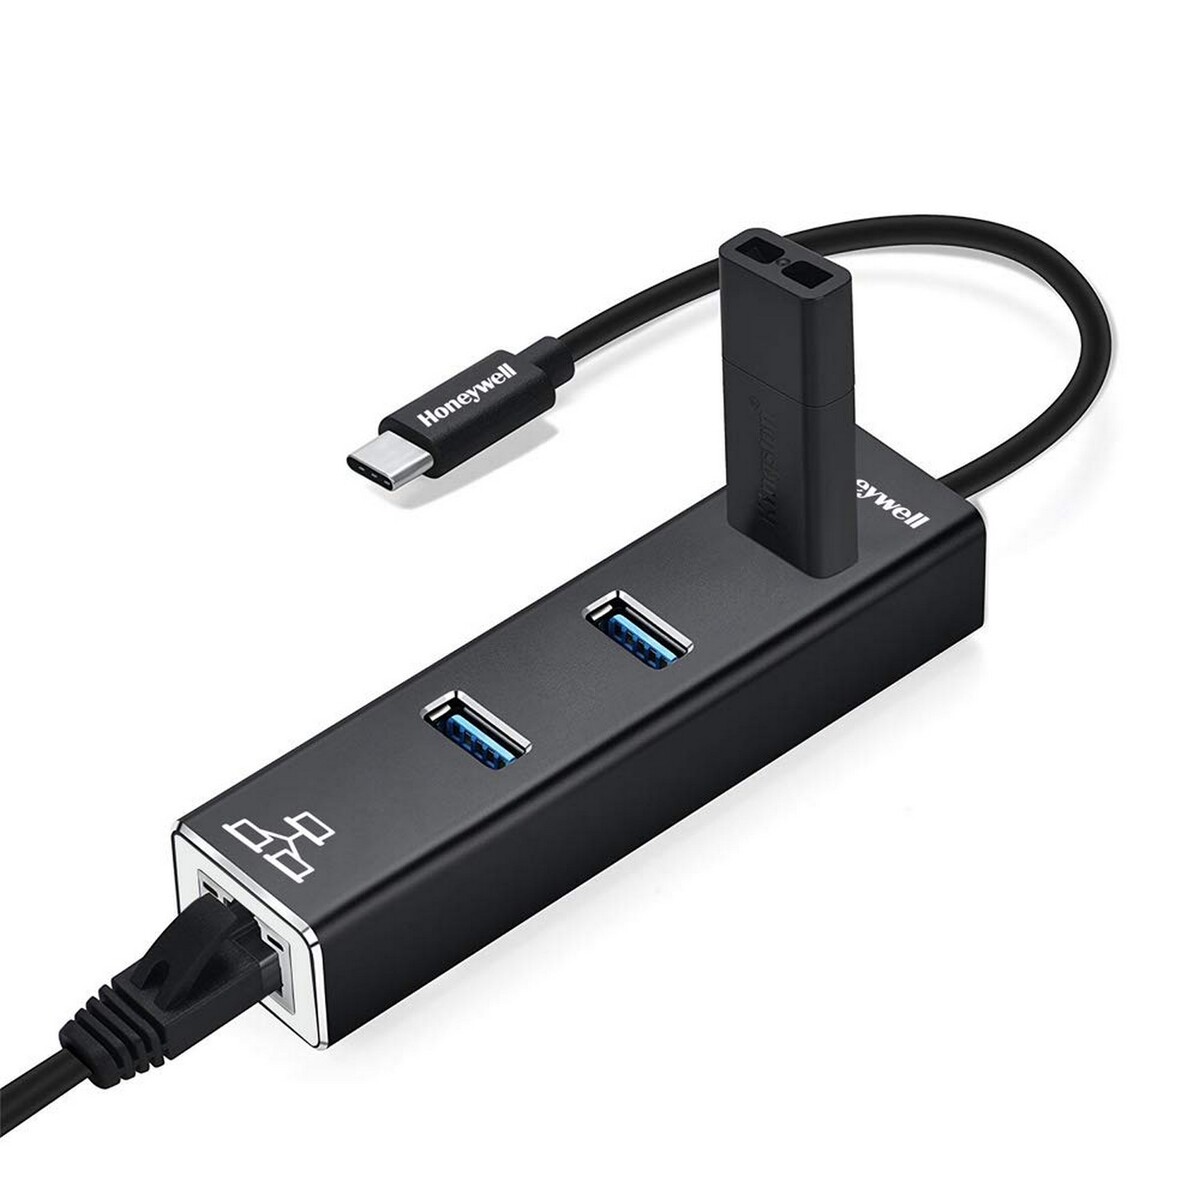 Honeywell USB-C to USB 3.0 + Ethernet Adapter